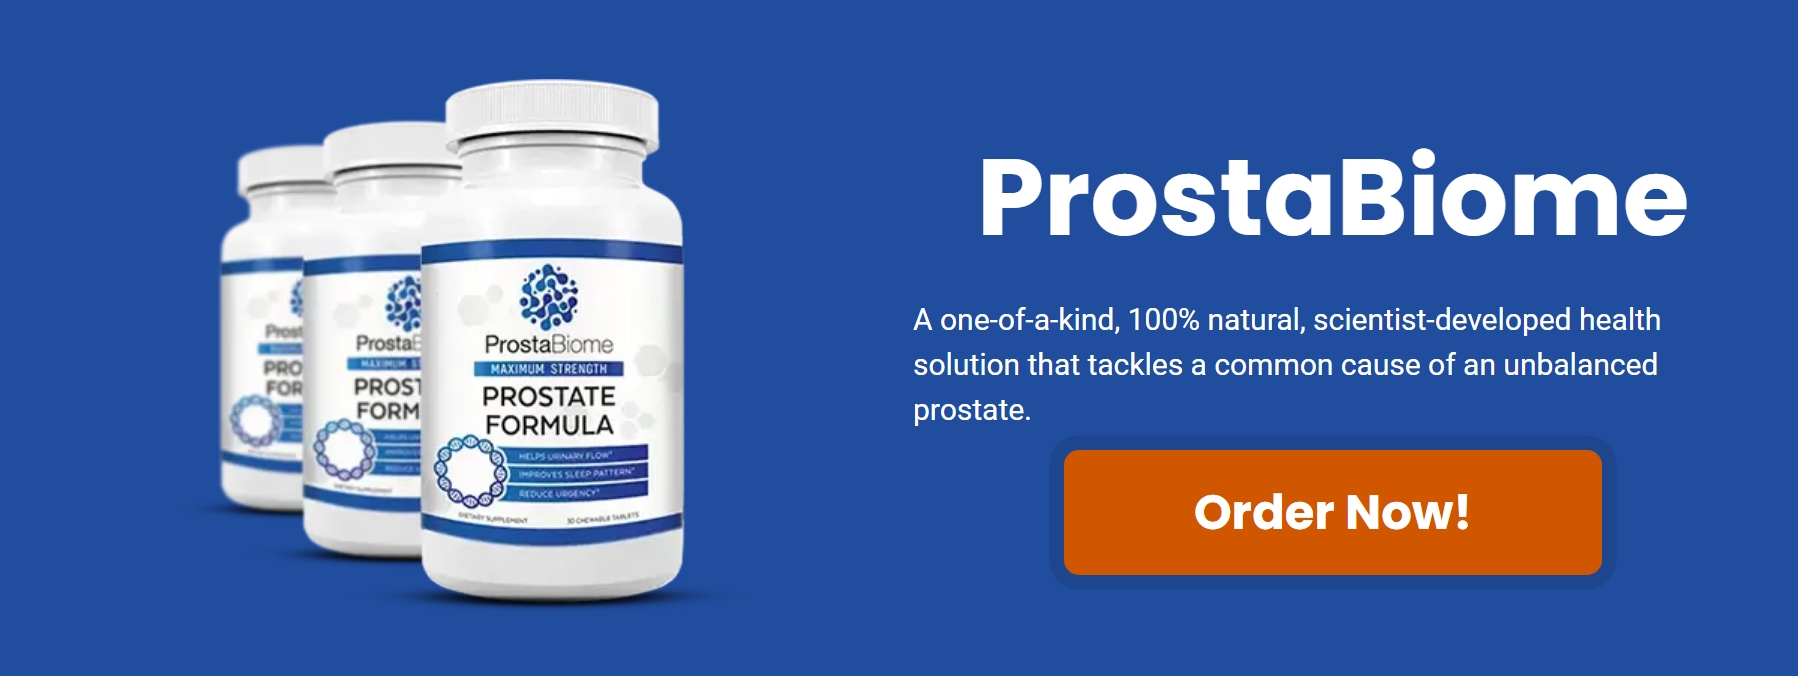 ProstaBiome supplement